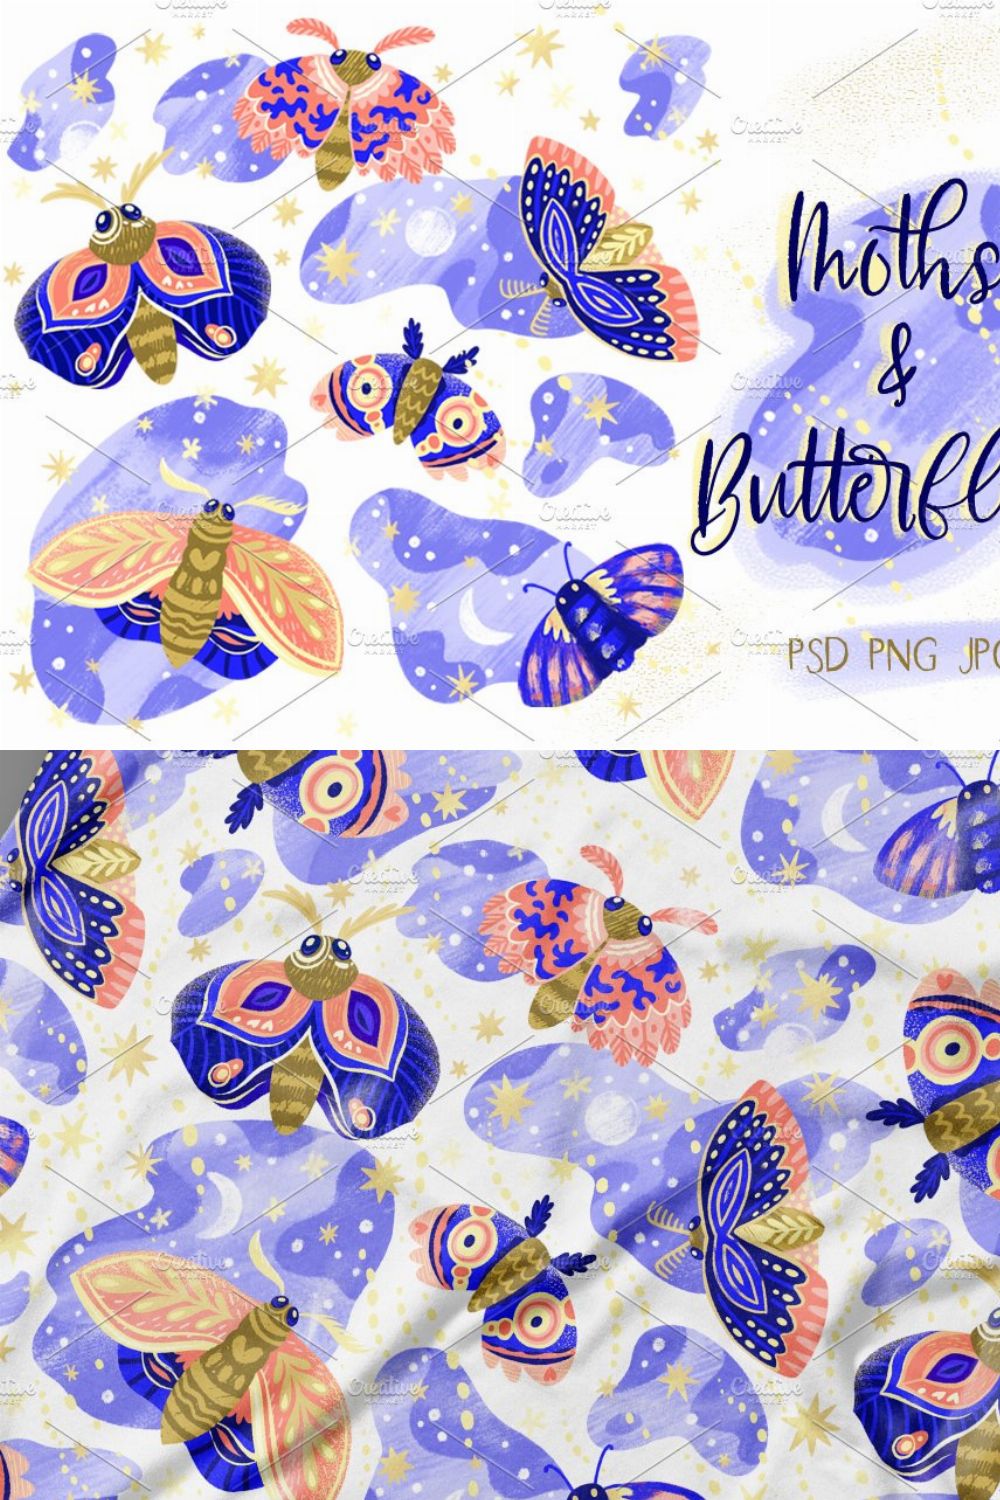 Beautiful Moths pinterest preview image.